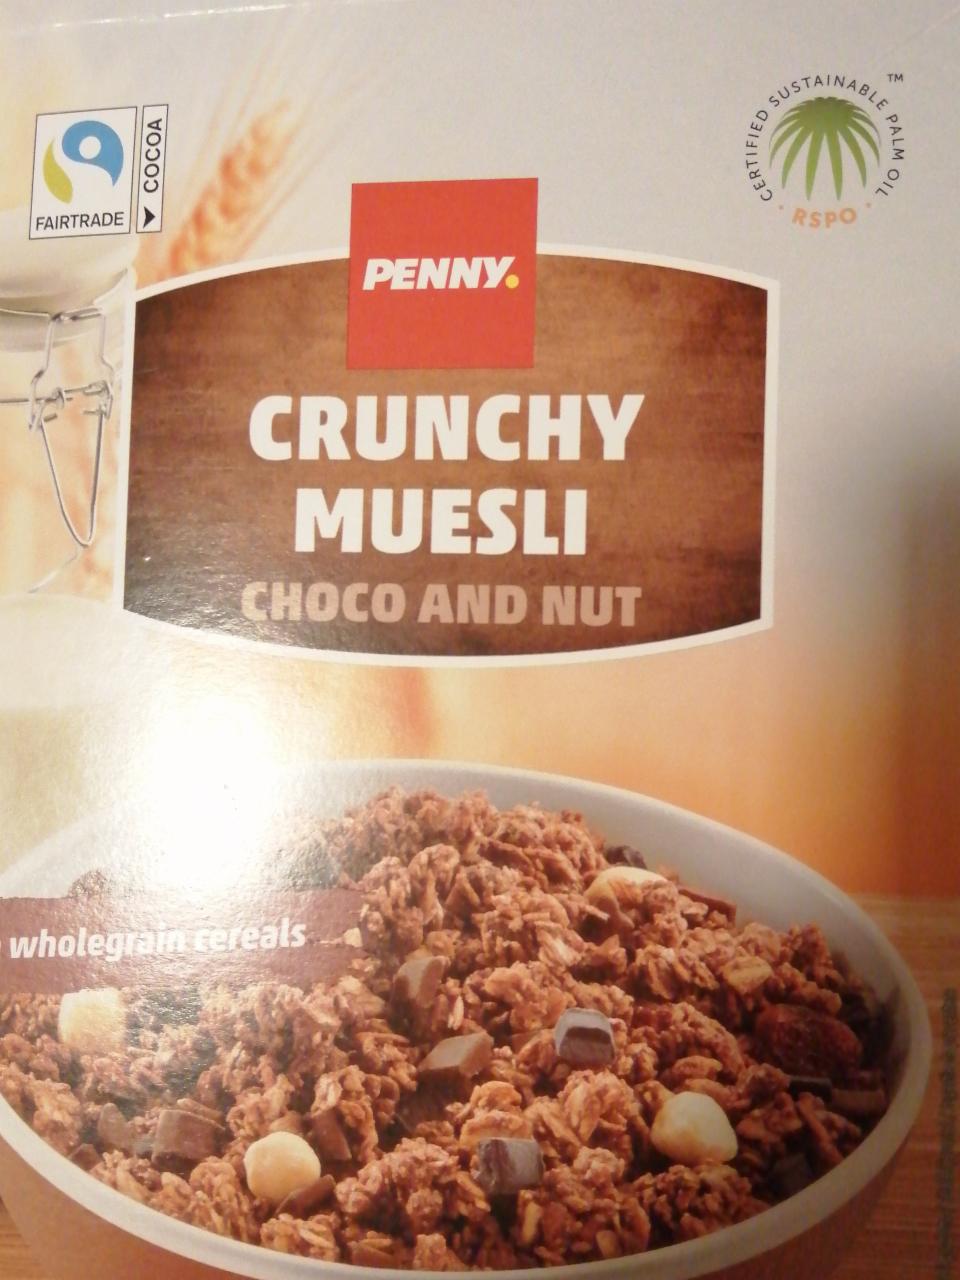 Képek - Crunchy muesli Choco and nut Penny